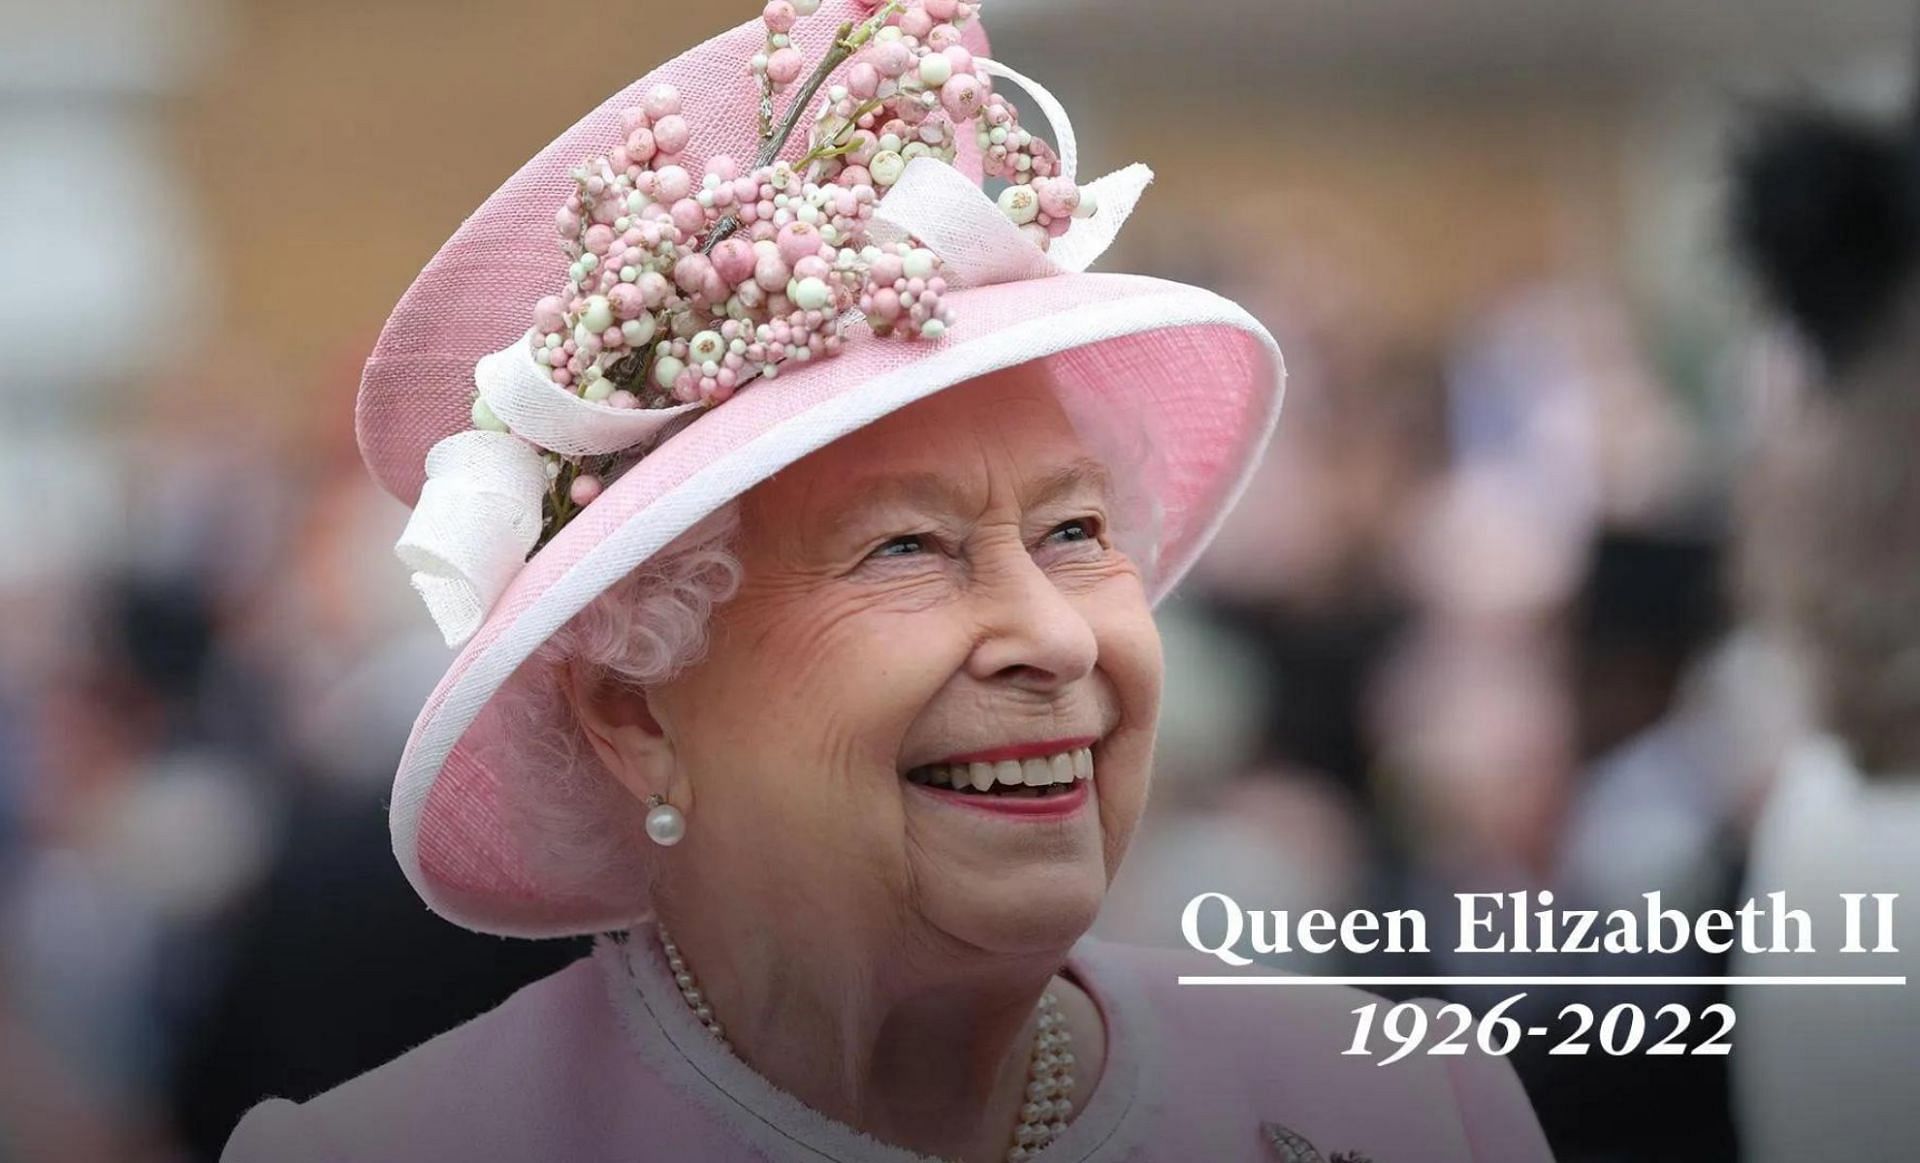 Queen Elizabeth recently passed (Image via Indy 100)